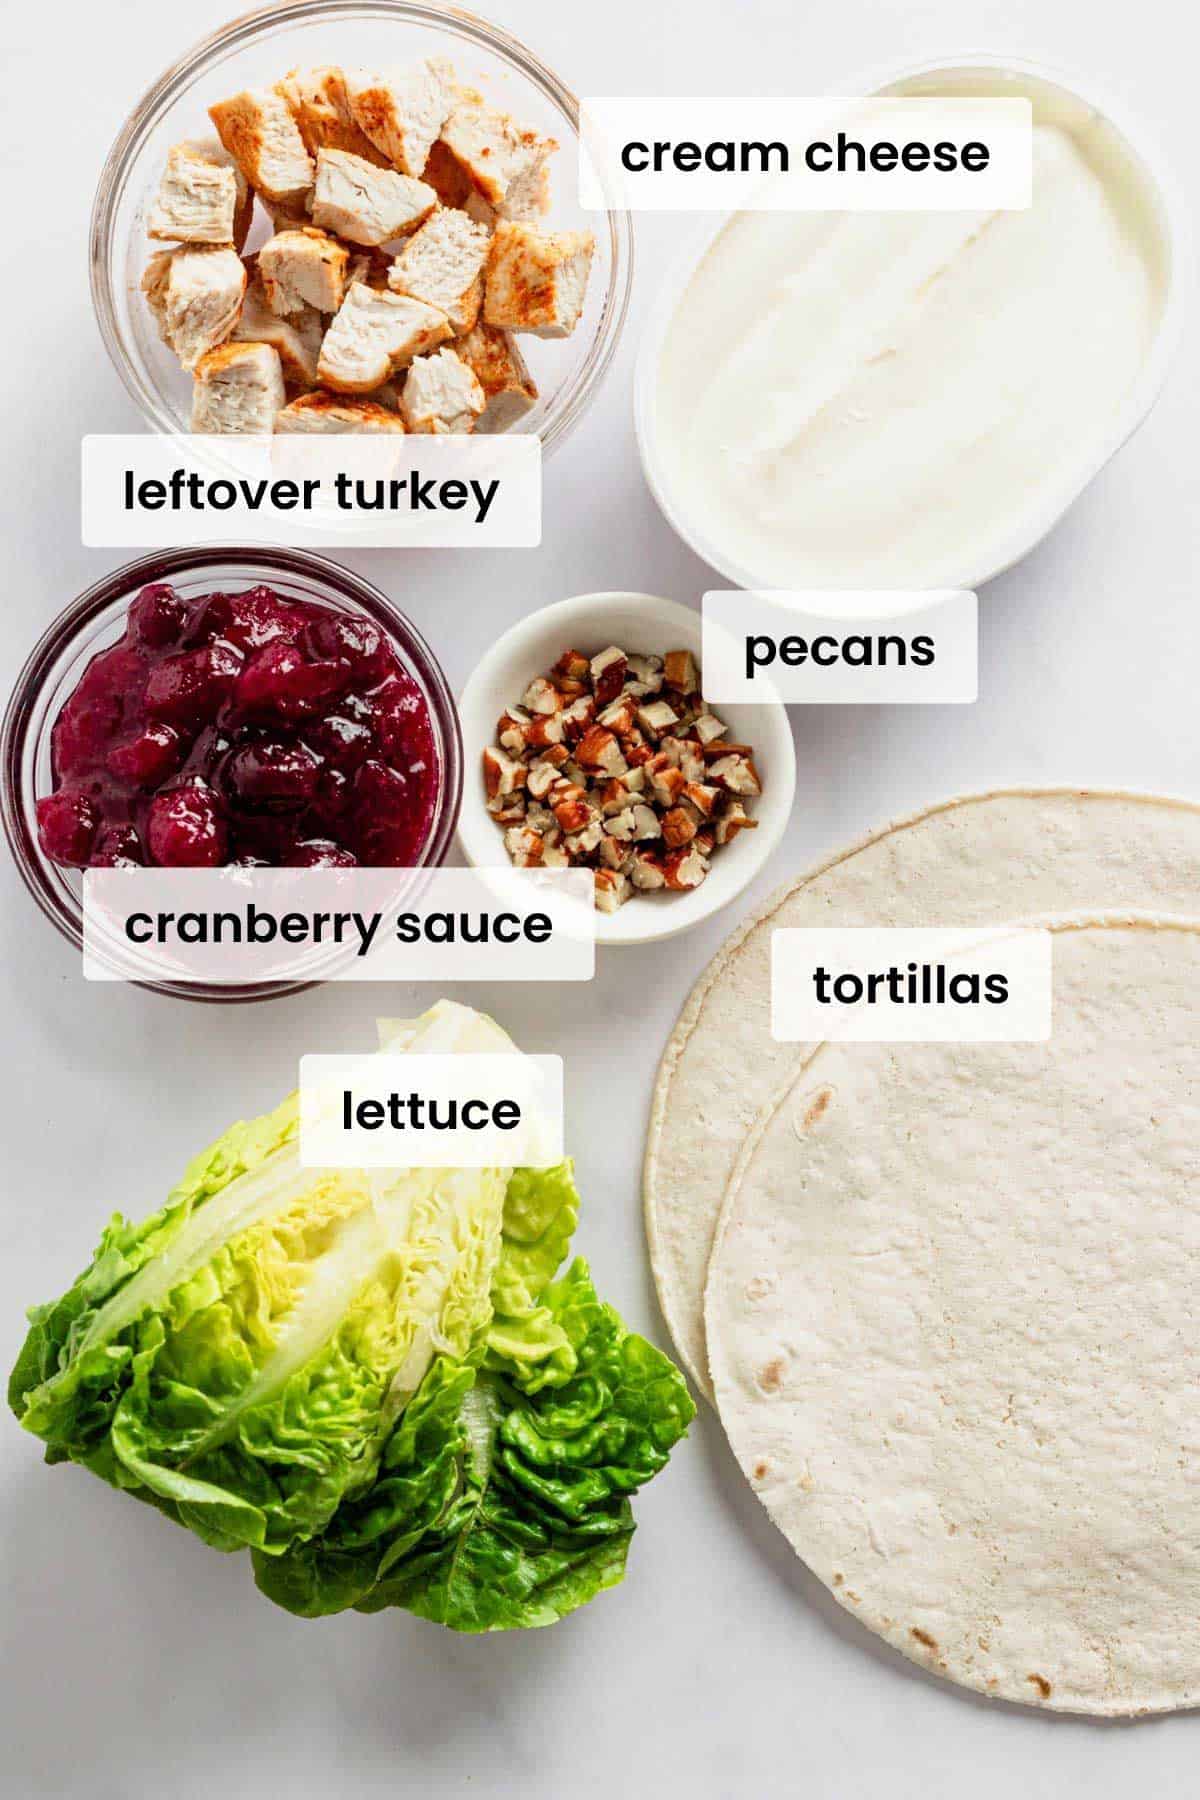 ingredients for leftover turkey wrap.